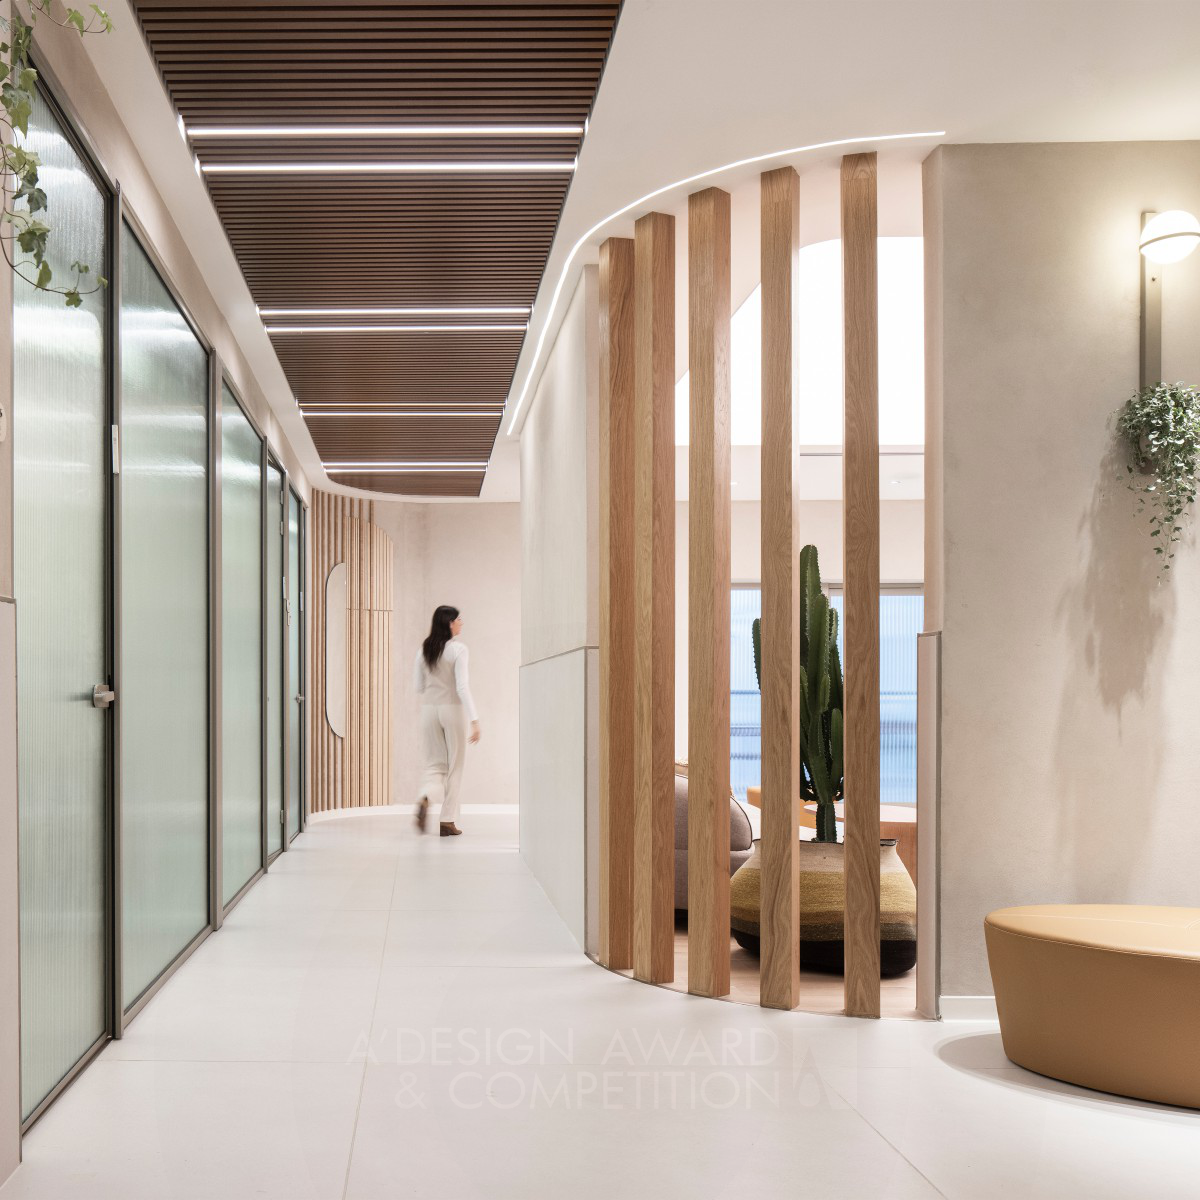 Studio Tali Gotthilf wins Bronze at the prestigious A' Interior Space, Retail and Exhibition Design Award with Longevity Oasis Clinic Interior Design.